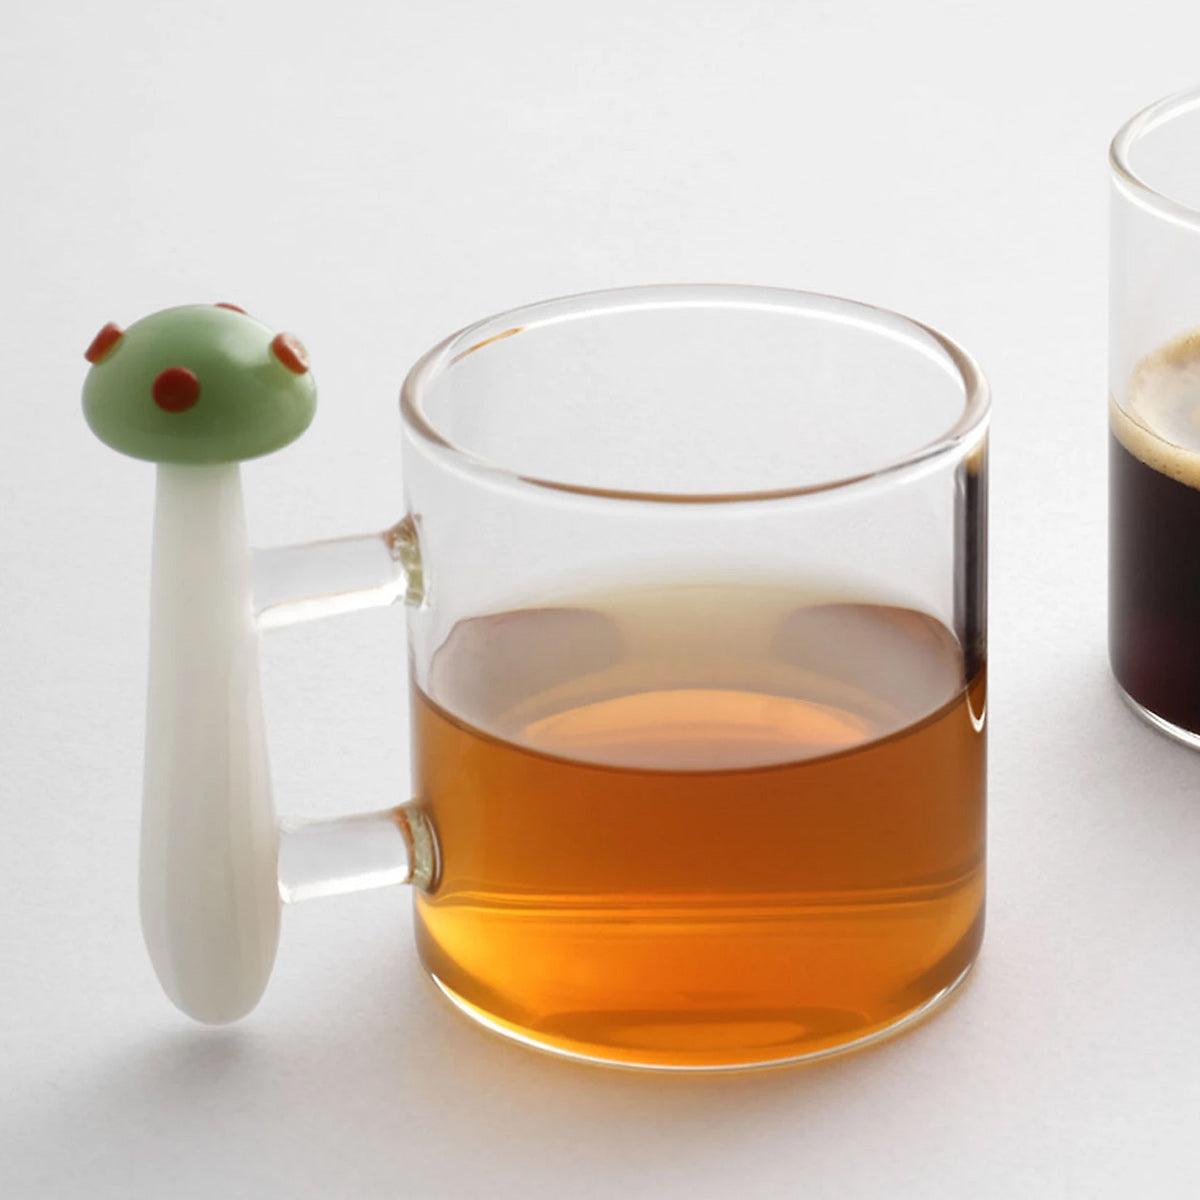 110cc【愛麗絲咖啡杯】(綠蘑菇) 義大利Ichendorf 手工茶杯盤組 - MSA玻璃雕刻